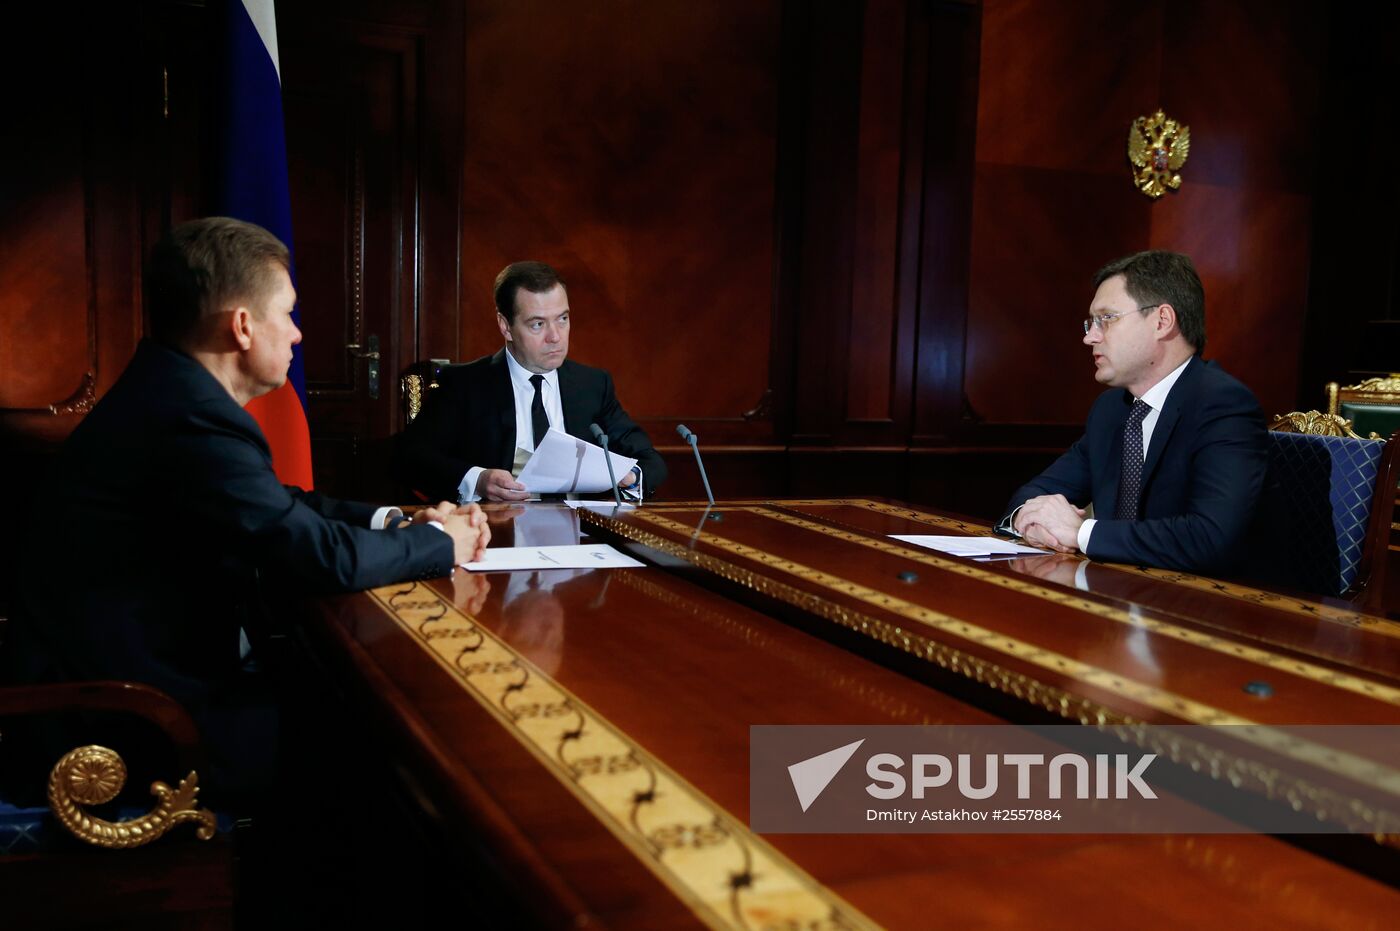 Prime Minister Dmitry Medvedev meets with Gazprom Minister Aleksei Miller and Energy Minister Alexander Novak